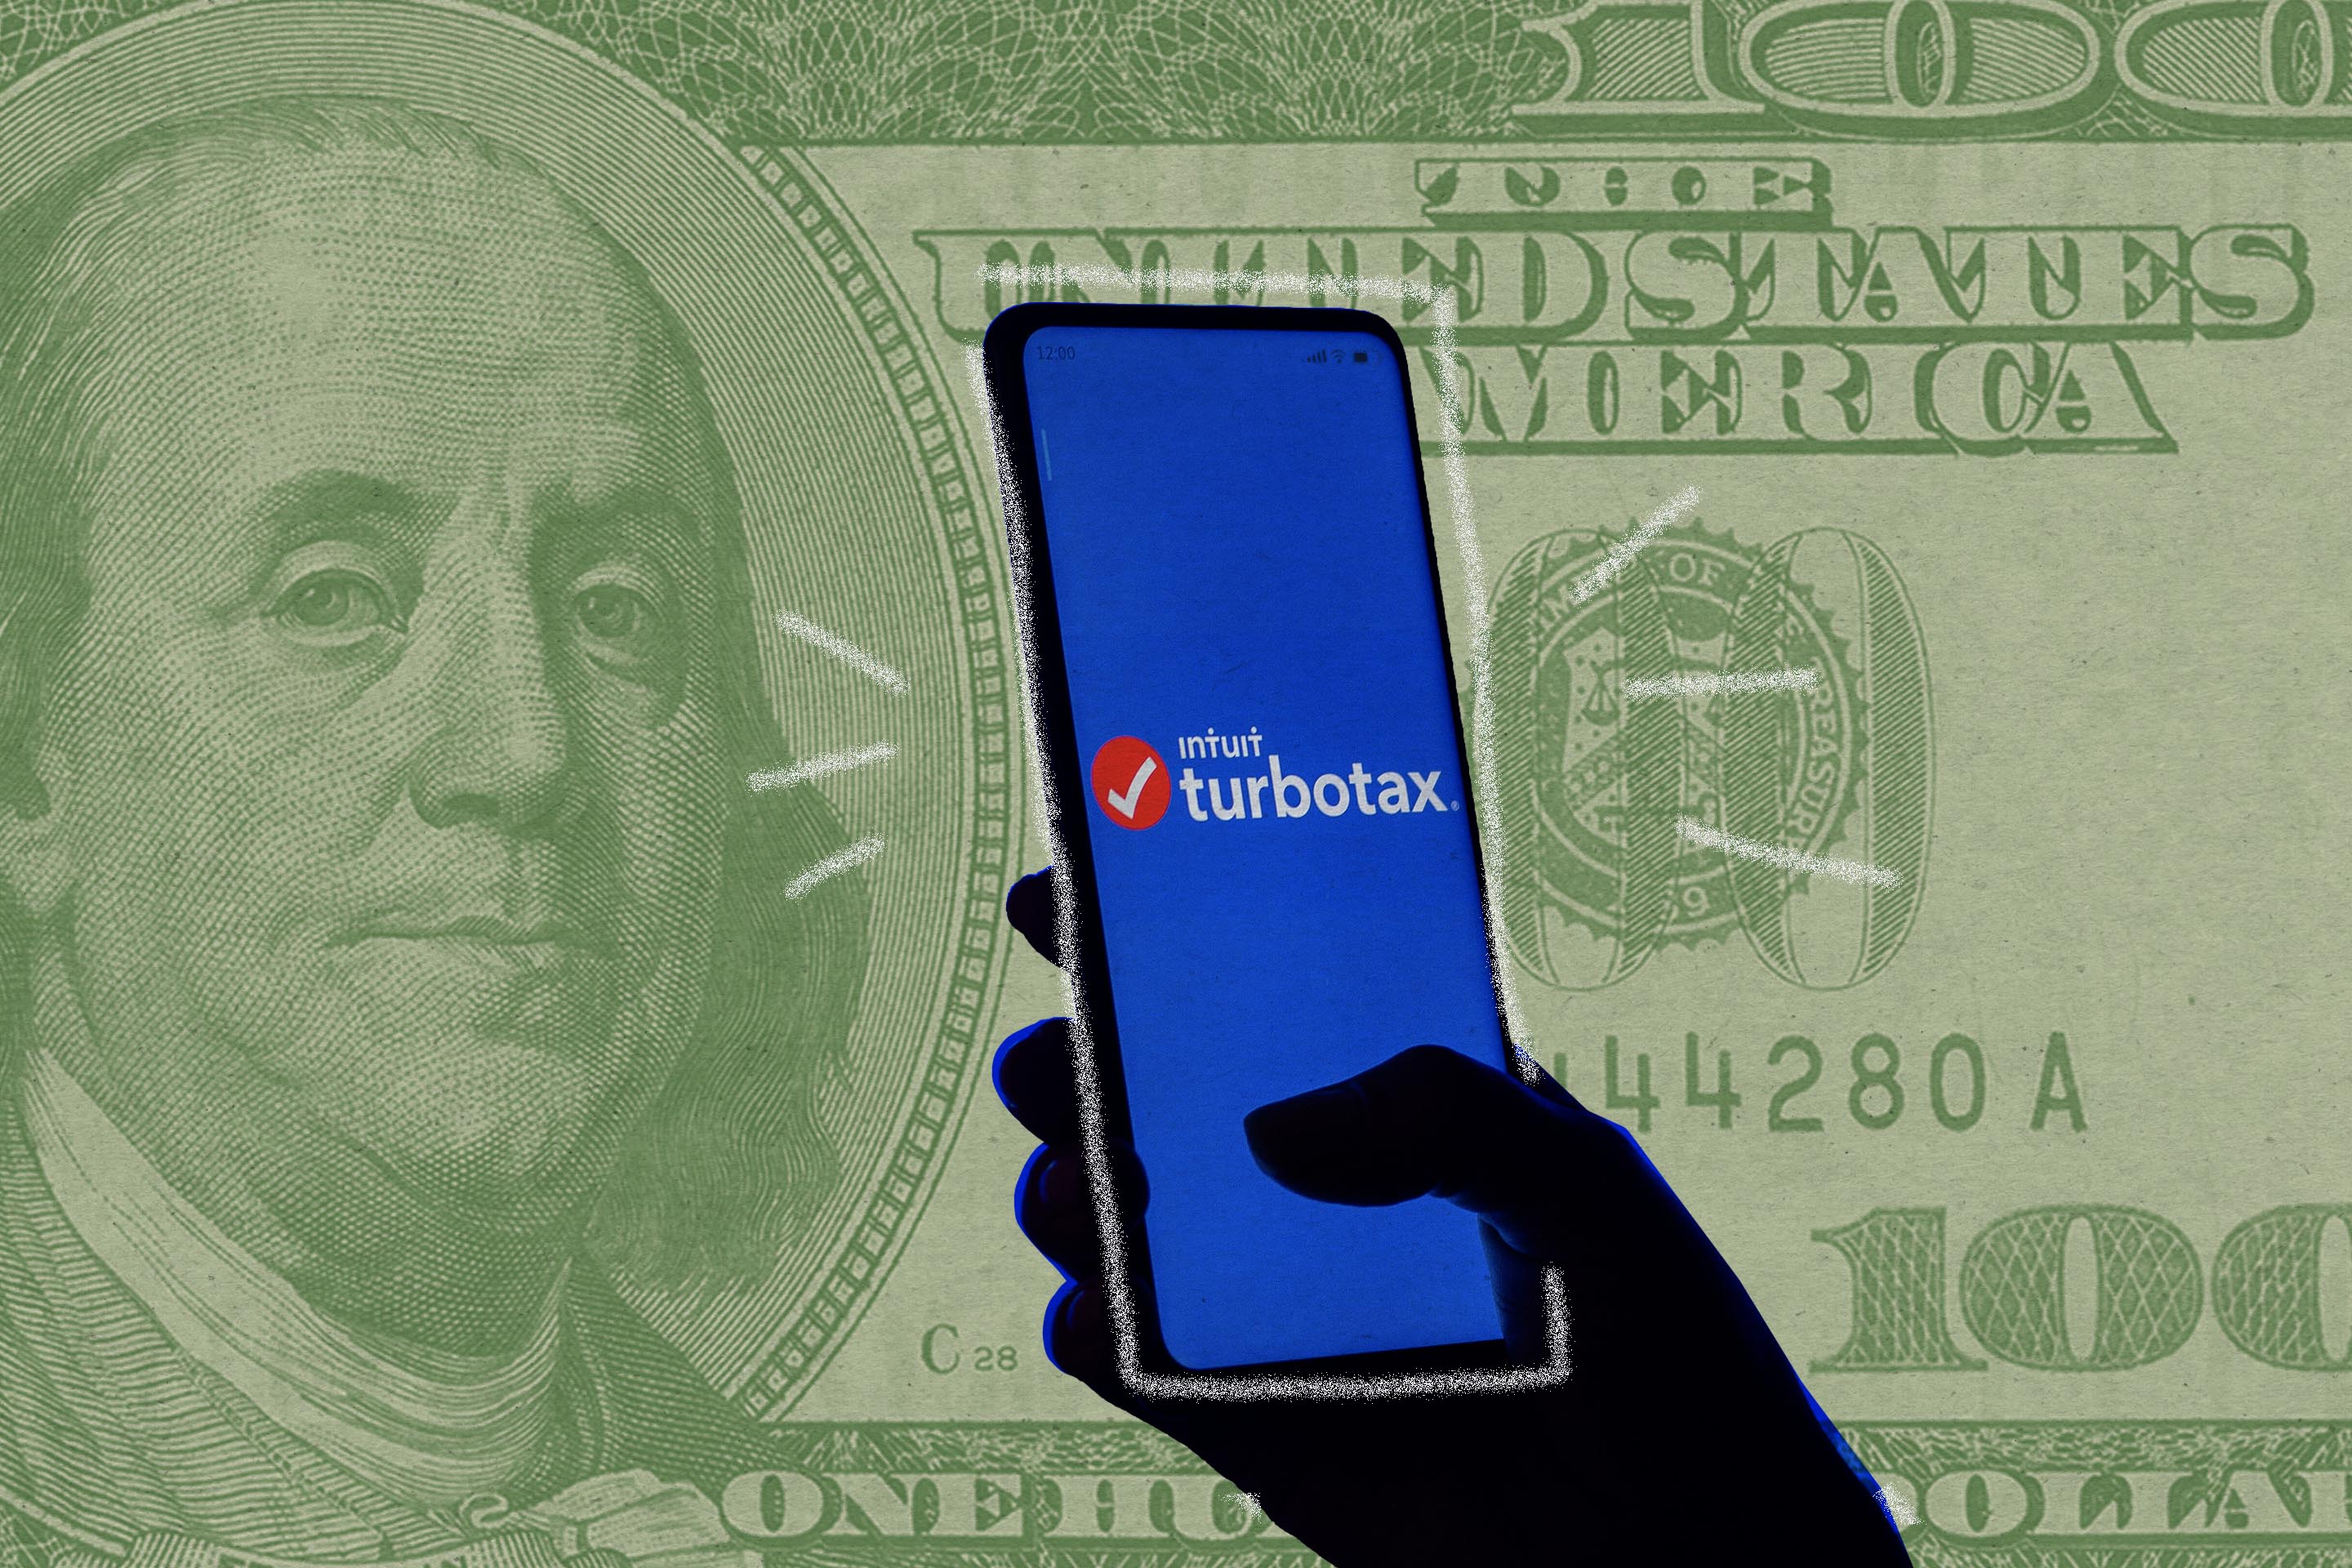 TurboTax Settlement: 4 Million Reimbursement Checks to Go Out This Month